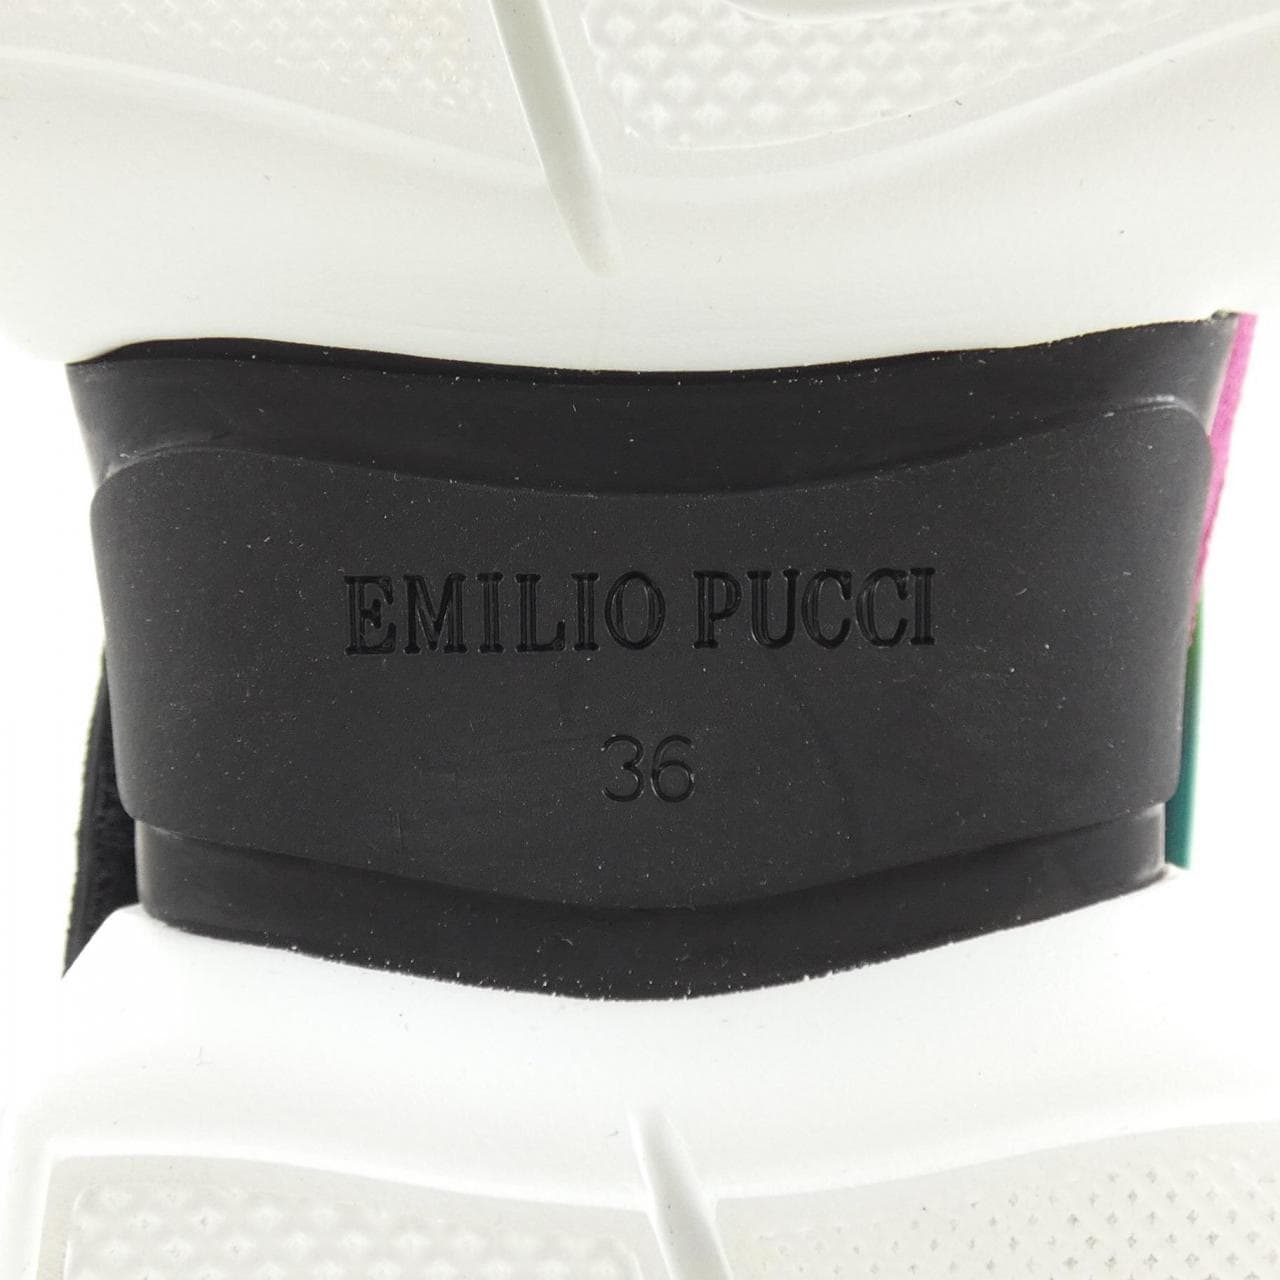 Emilio Pucci sneakers